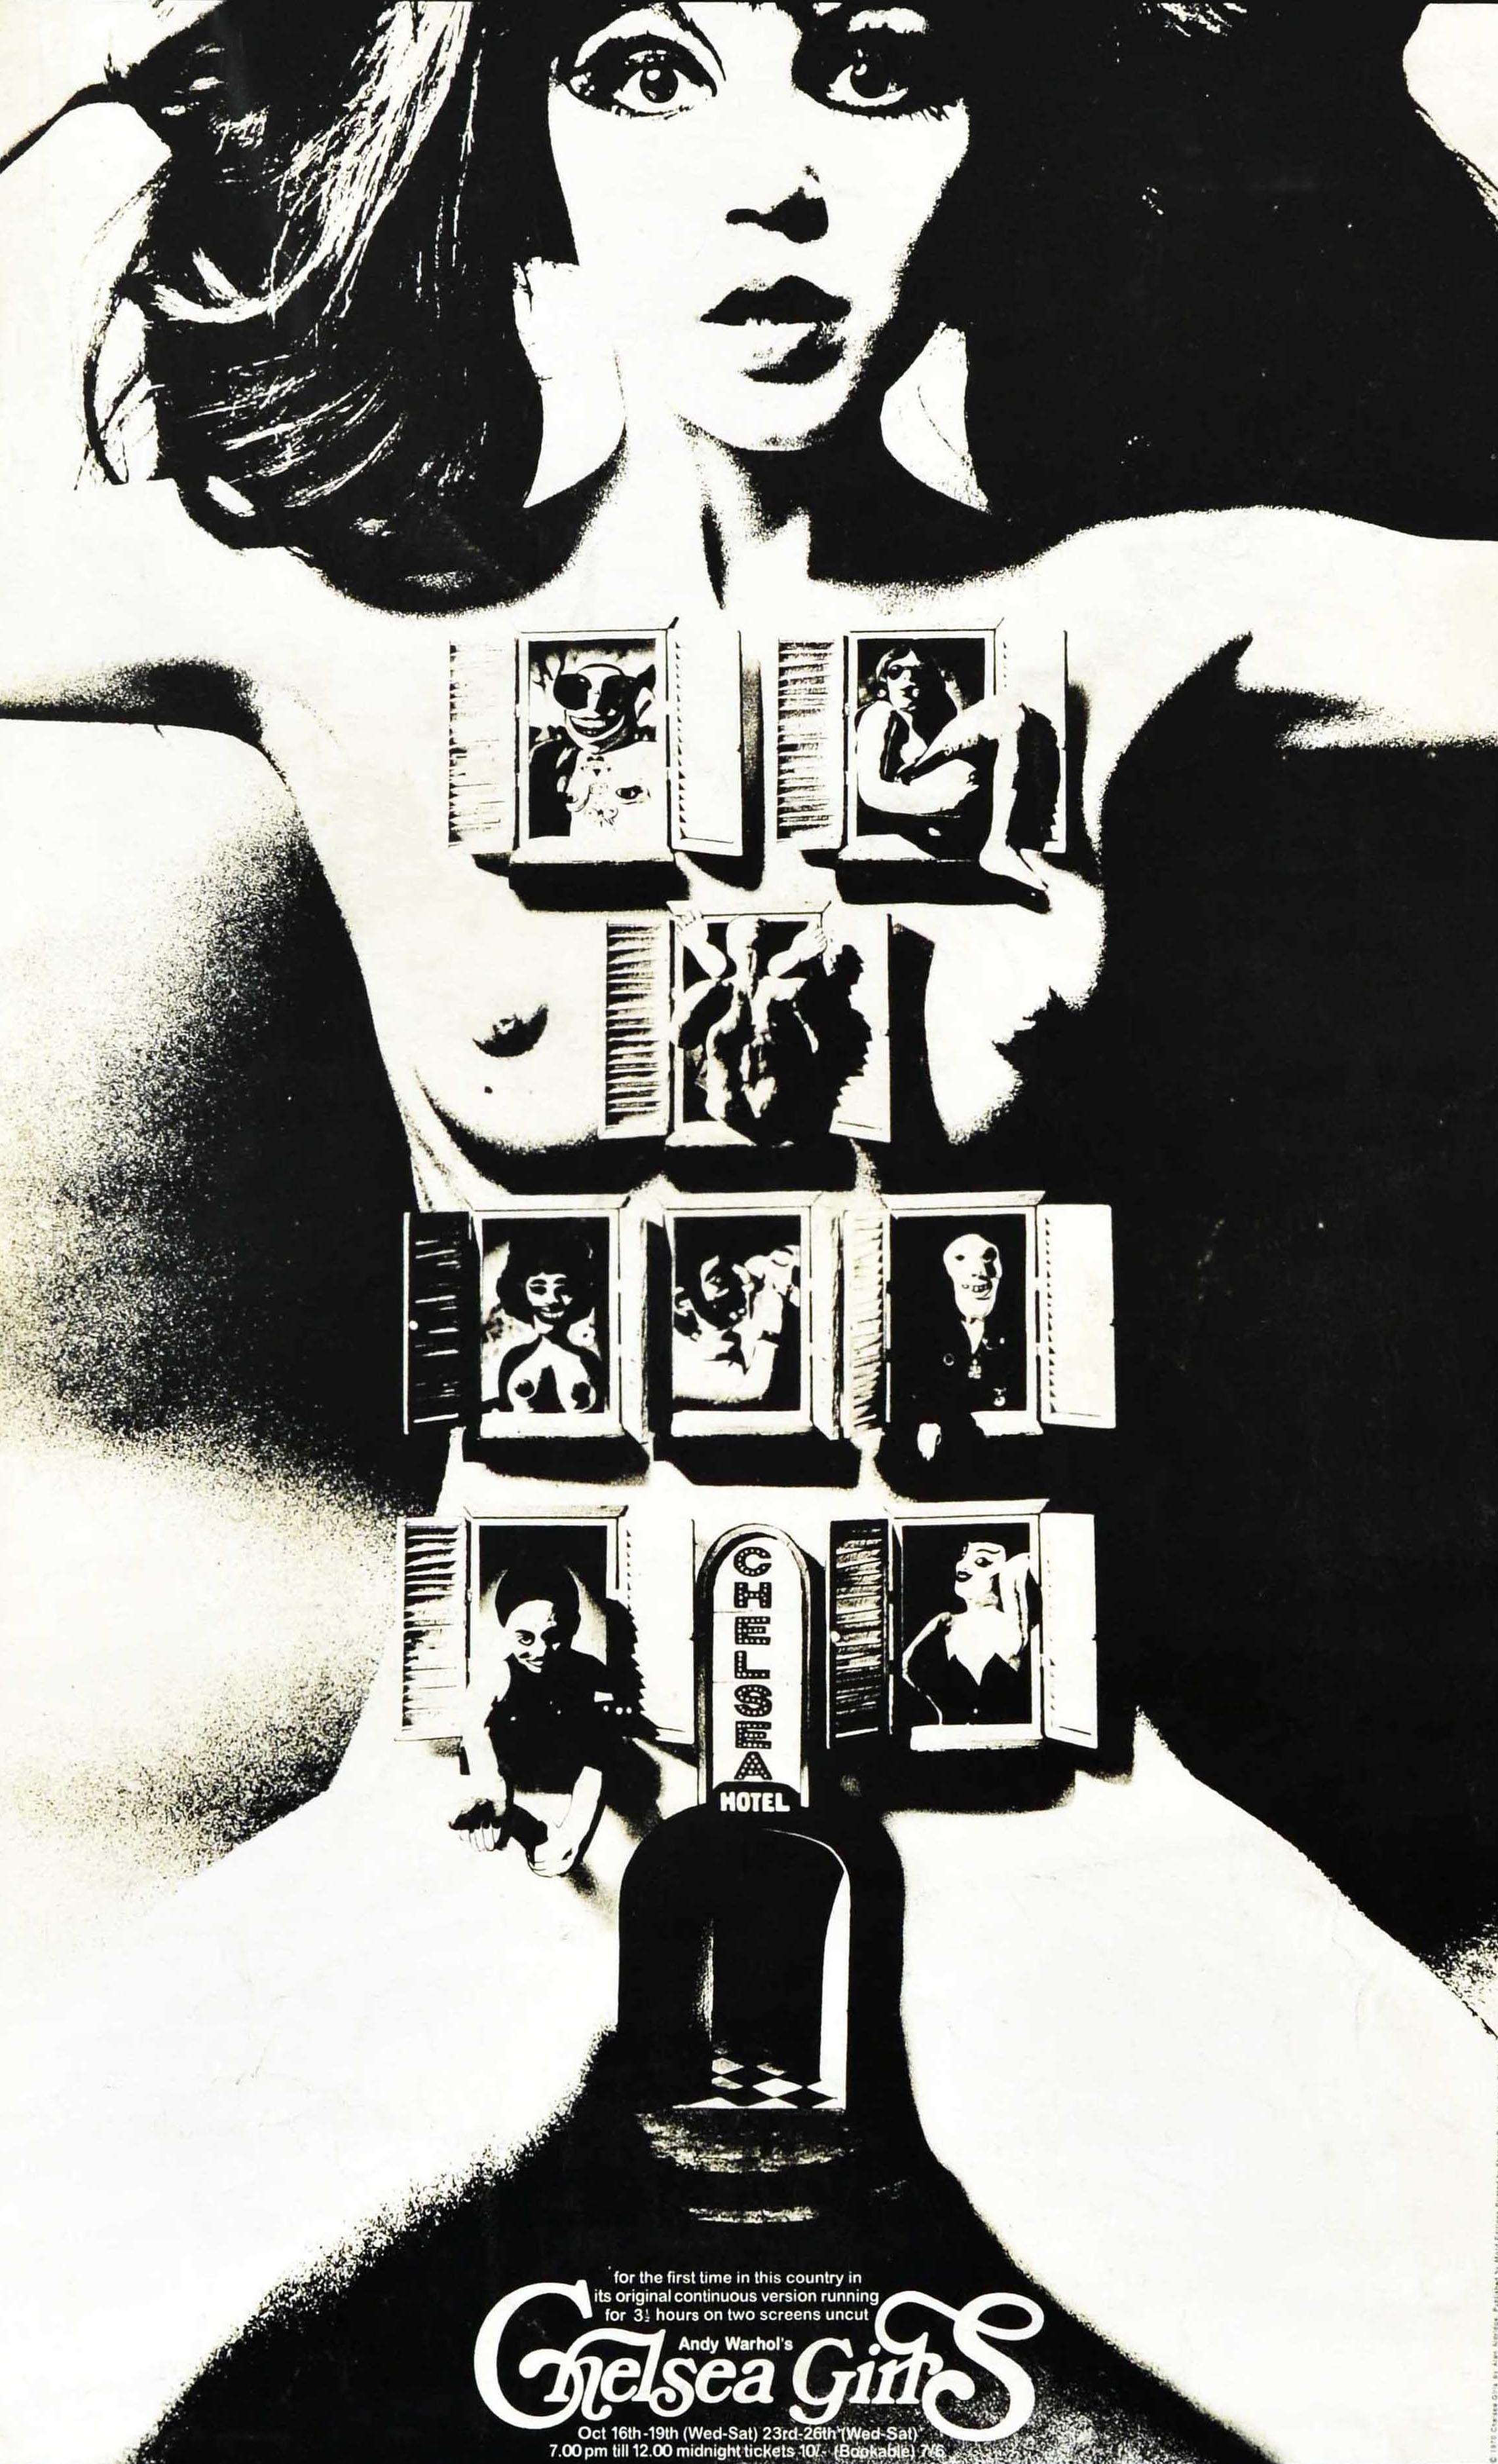 Original Vintage Arthouse Cinema Poster Andy Warhol Chelsea Girls Avant Garde - Print by Alan Aldridge